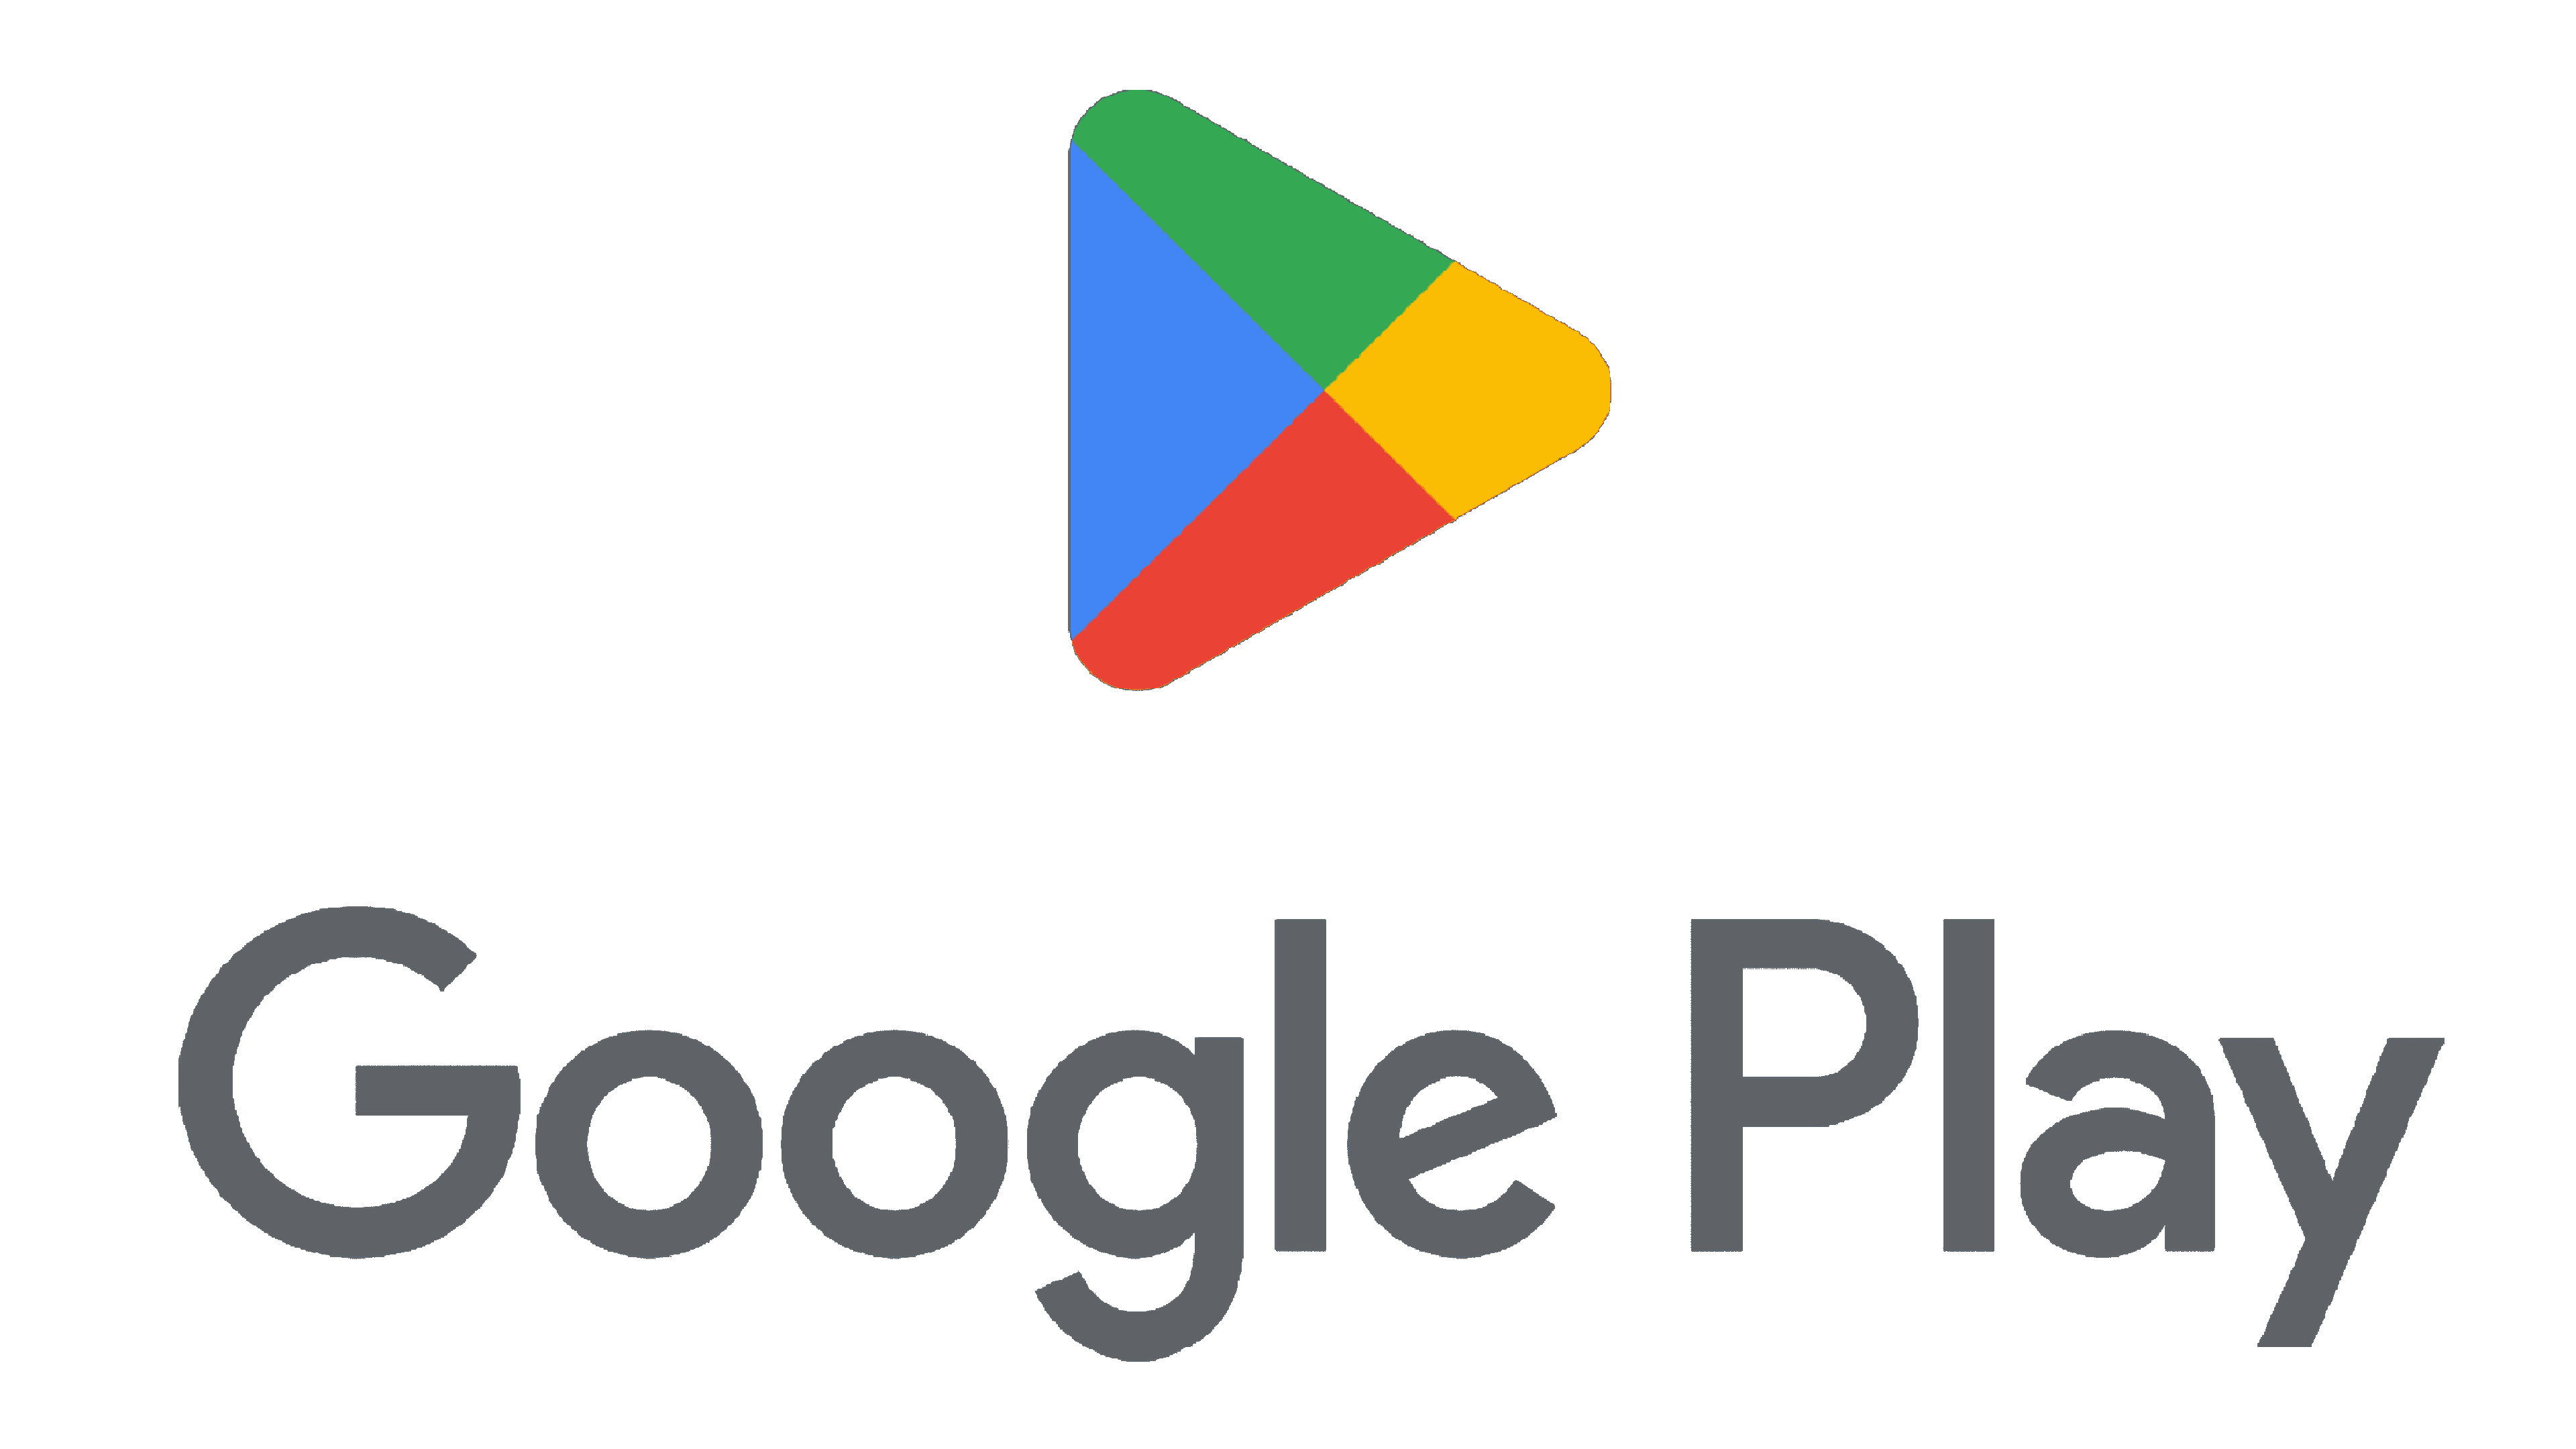 Logo de Google Play Store